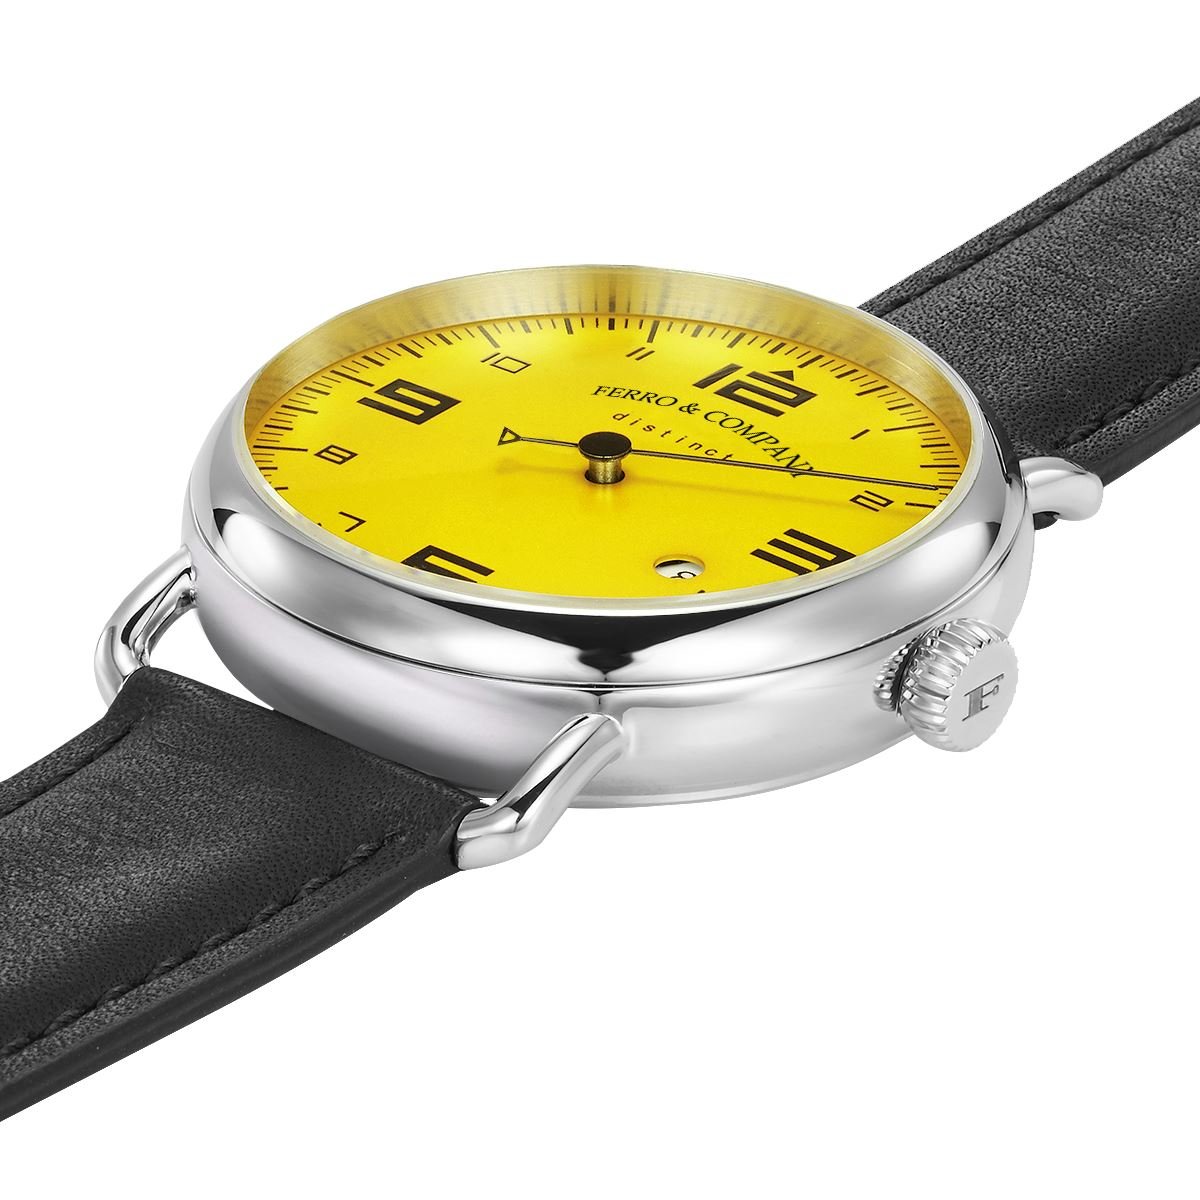 Ferro Watches Distinct 2 Vintage Style Race One Hand Watch Yellow - Ferro &amp; Company Watches